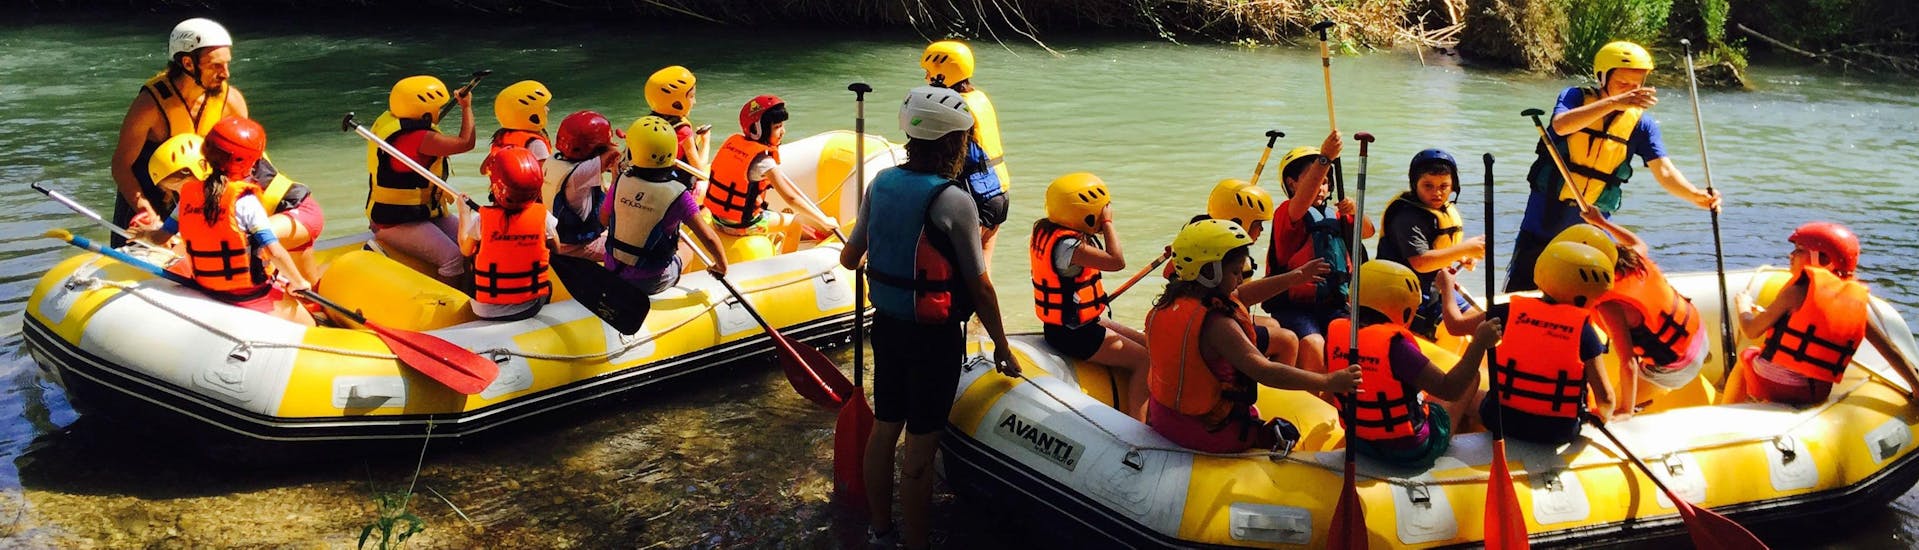 Rafting "Familia & Amigos" - Río Turia.